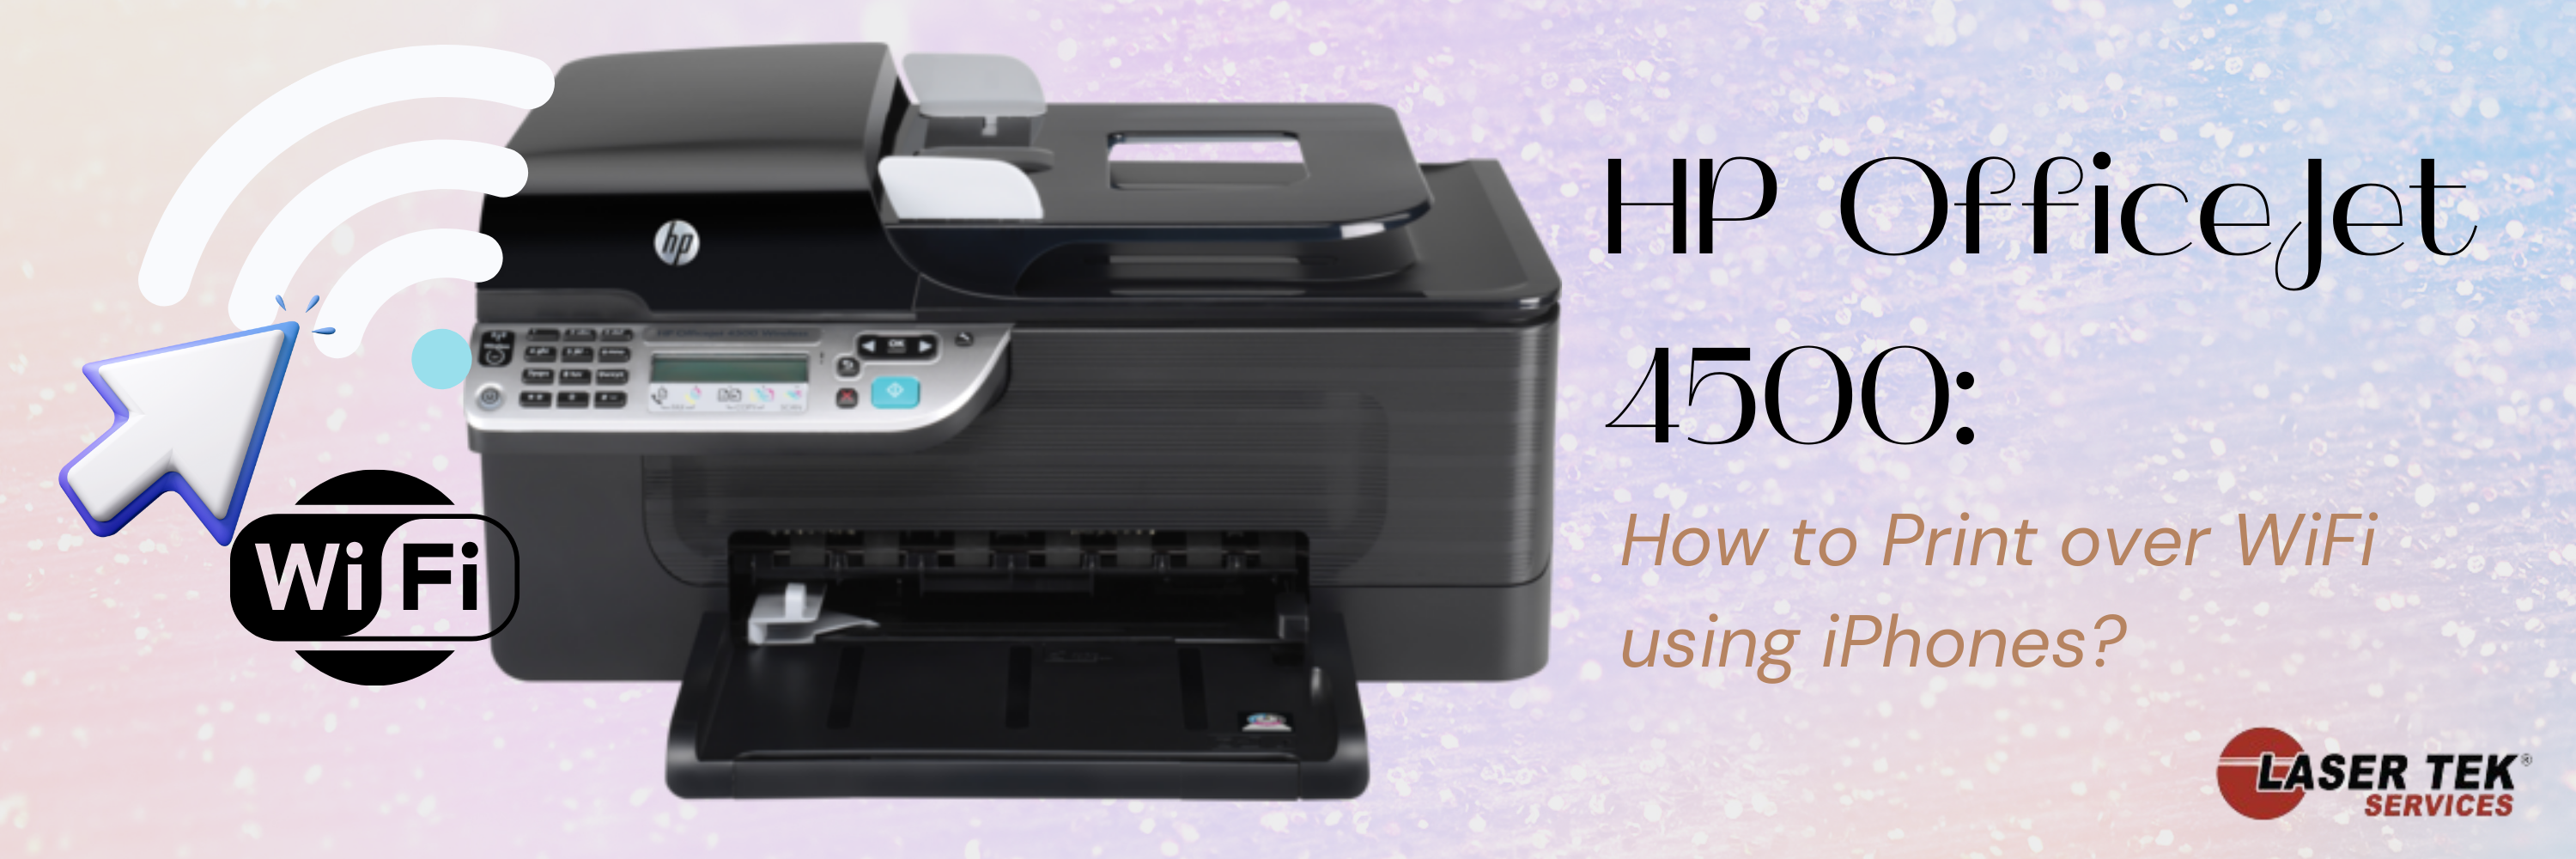 HP OfficeJet 4500: How to Print over using iPhones? – Laser Tek